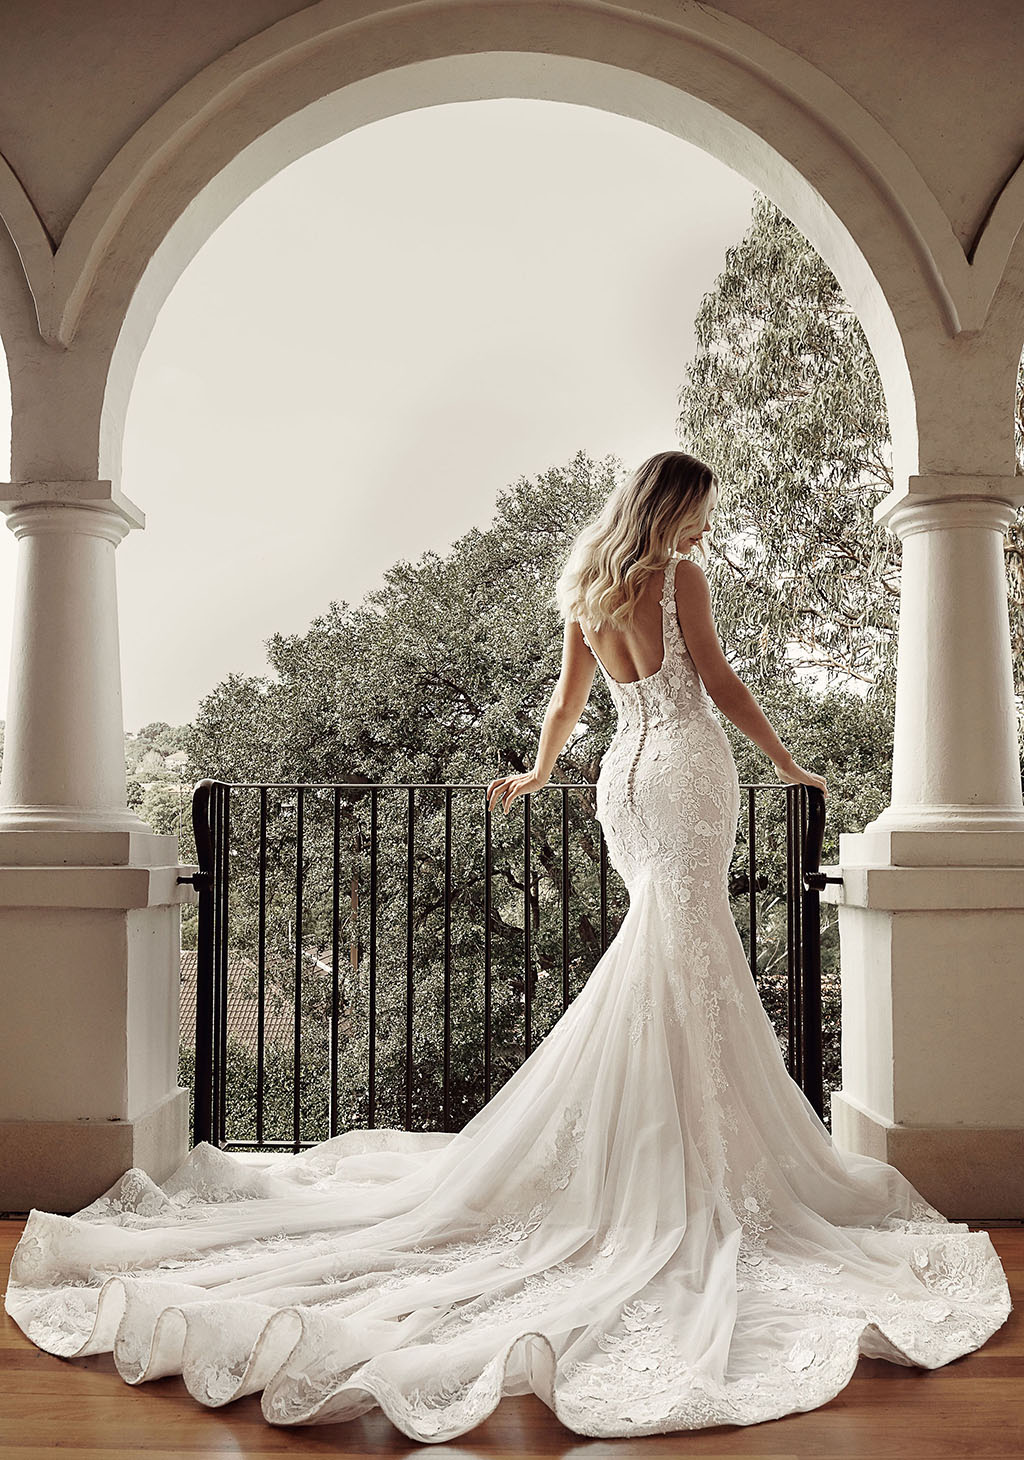 20 Utterly Romantic Wedding Dresses for the Fashion-Forward Bride